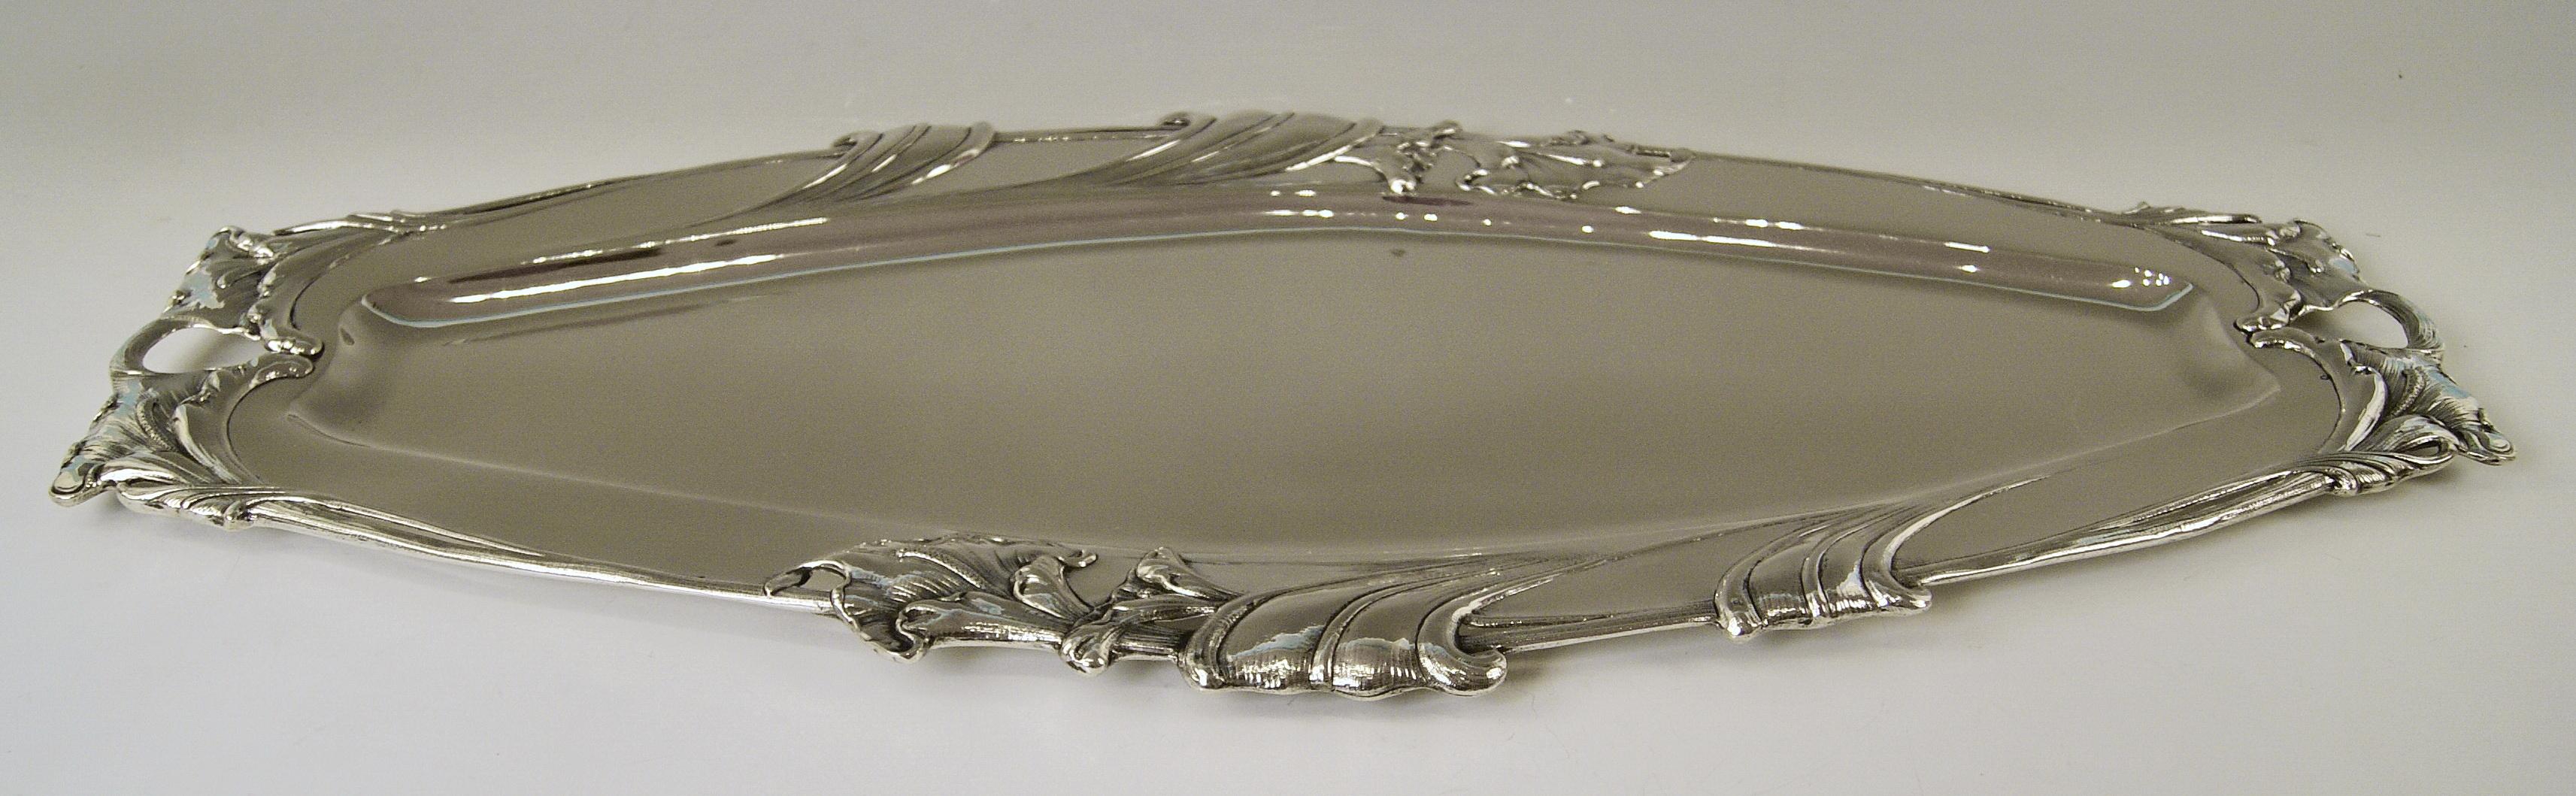 Early 20th Century Silver Austrian Art Nouveau Serving Platter Length Viennna, circa 1900